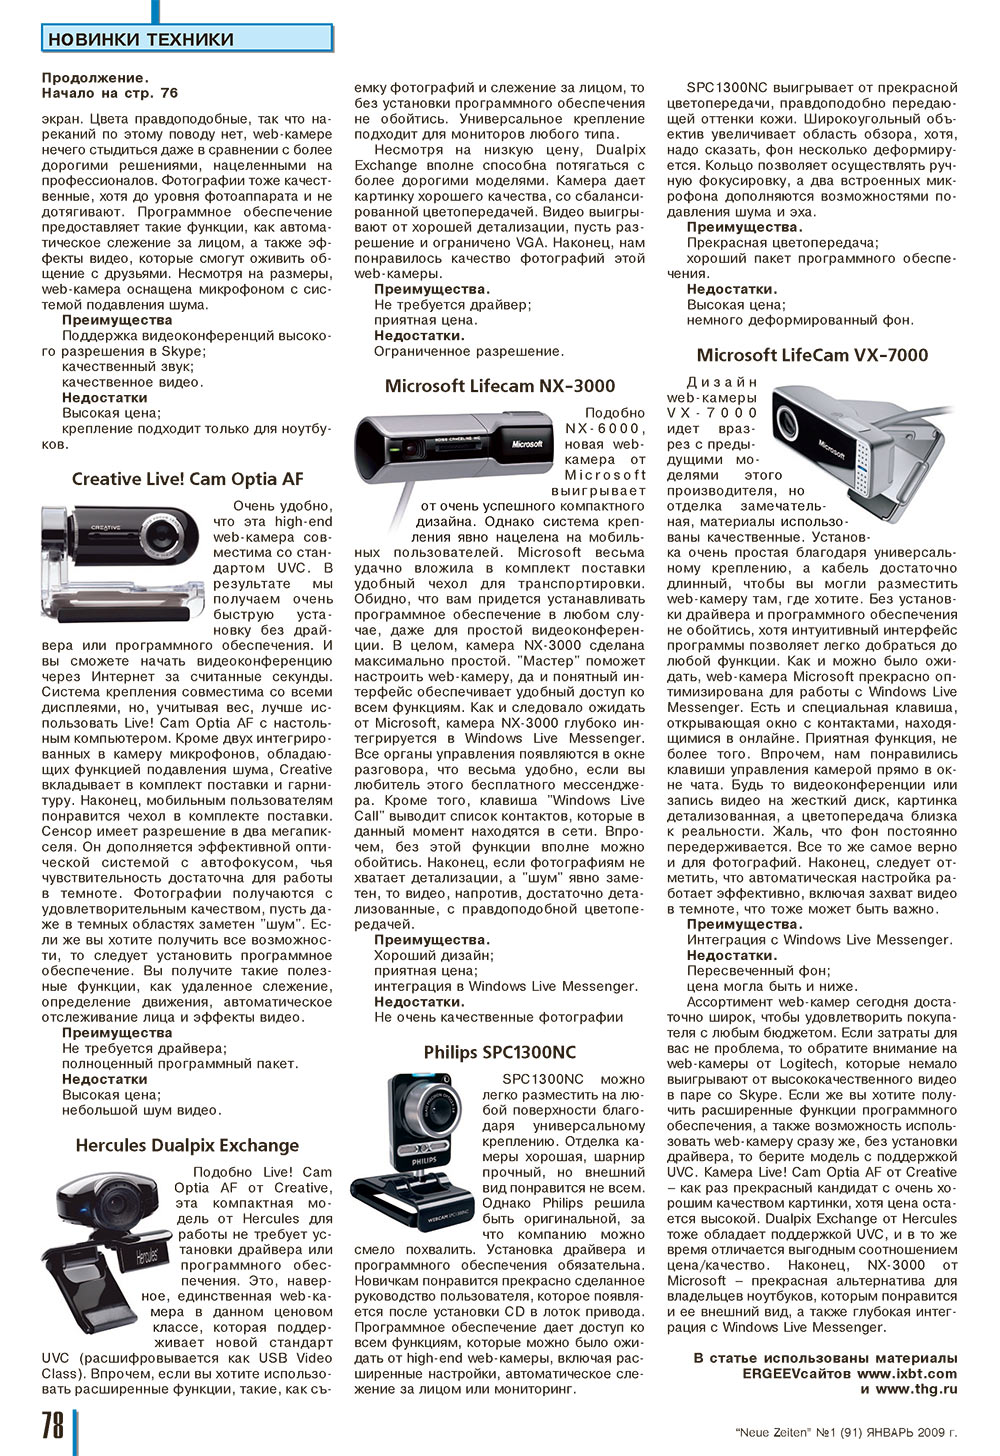 Neue Zeiten (журнал). 2009 год, номер 1, стр. 78